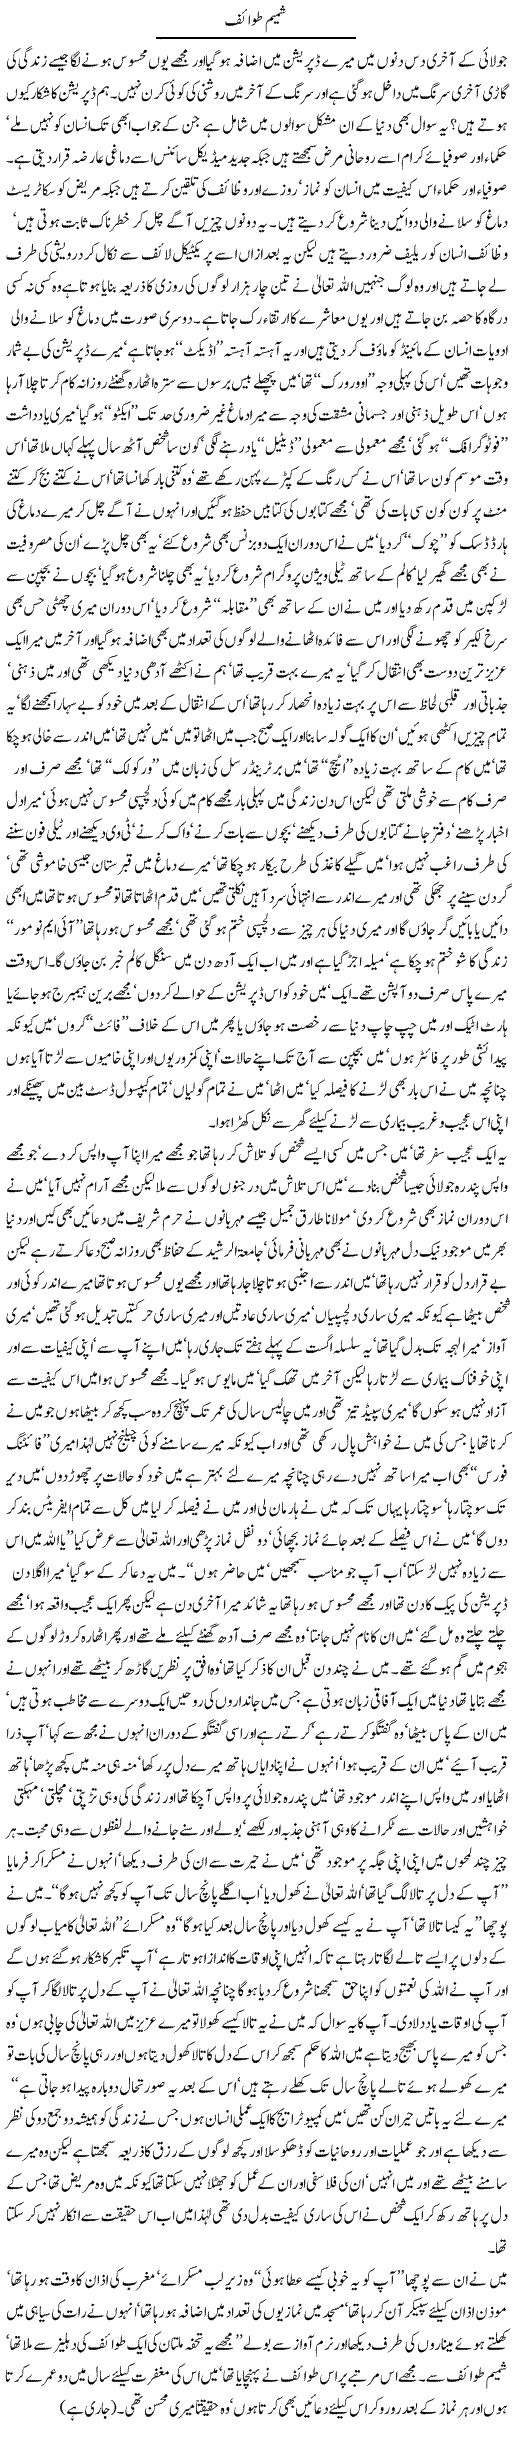 Shamim Prostitute Express Column Javed Chaudhry 10 September 2010